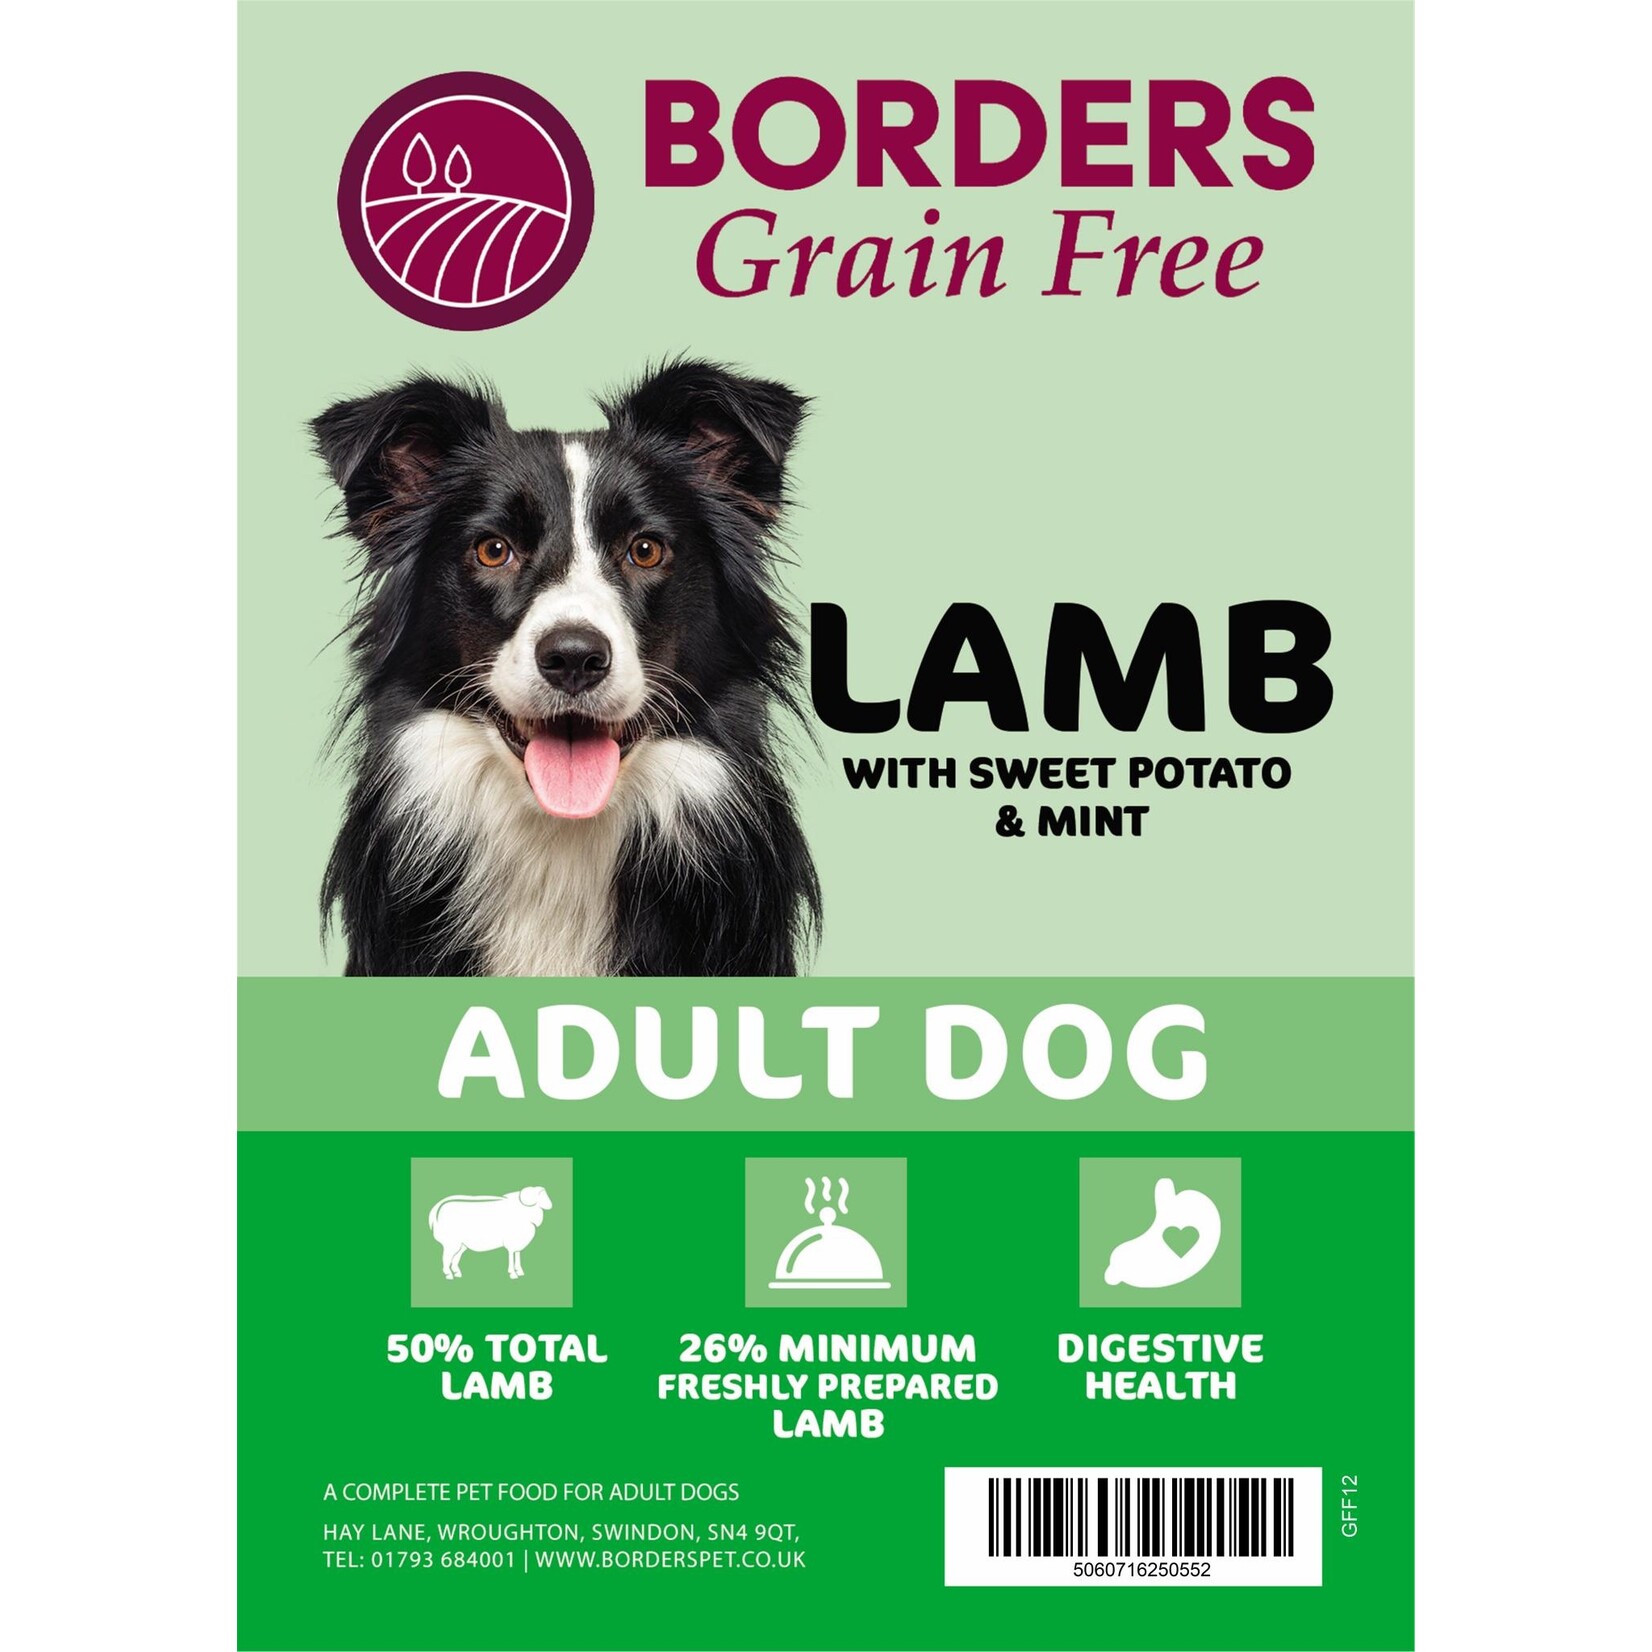 Borders Grain Free Adult Dog Dry Food with Lamb, Sweet Potato & Mint